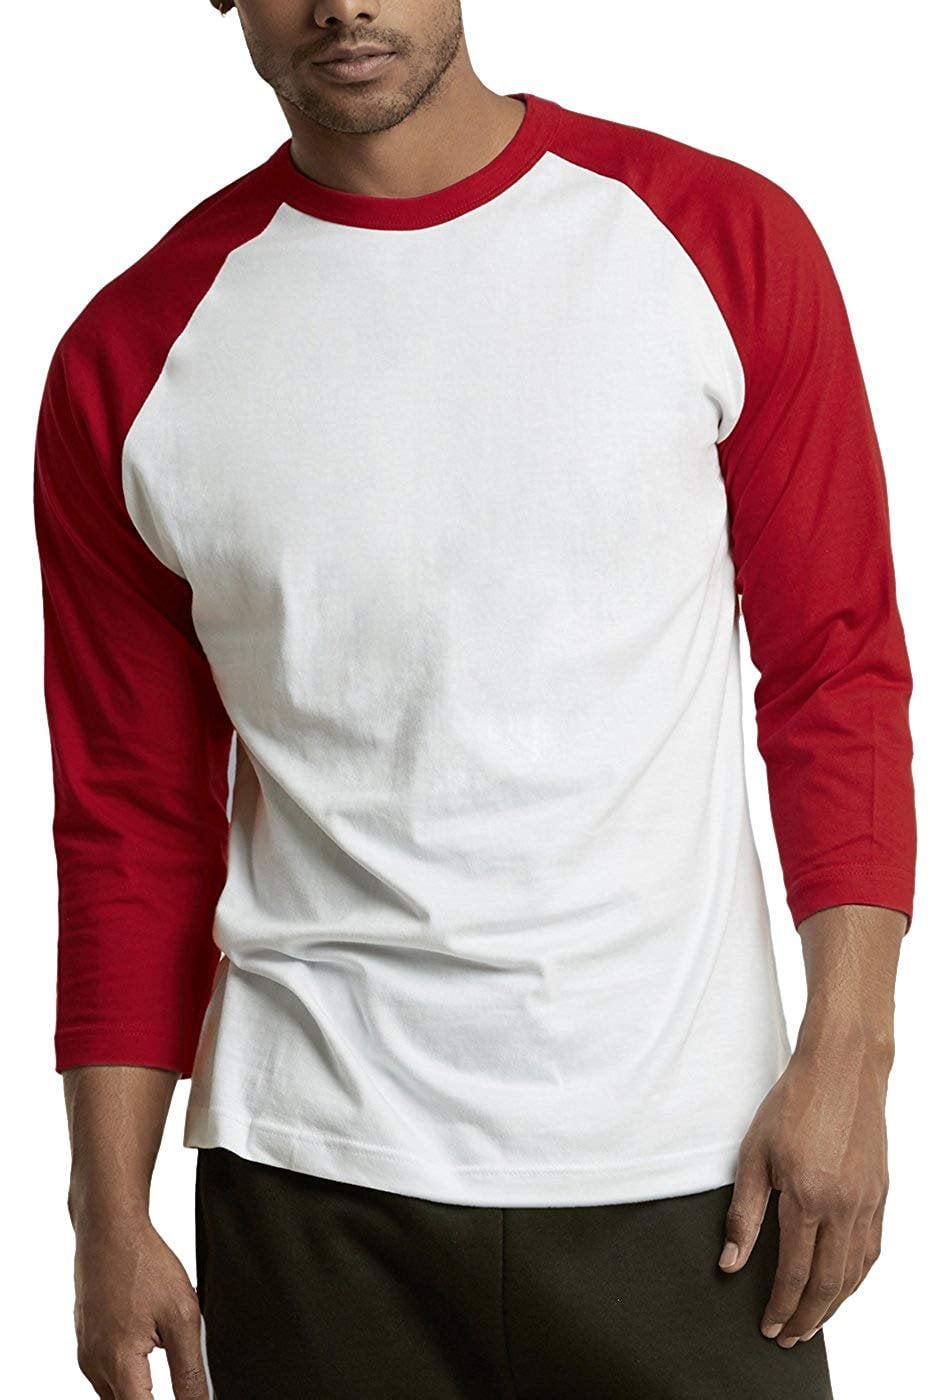 DailyWear Mens Casual 3/4 Sleeve Plain Baseball Cotton T Shirts RED ...